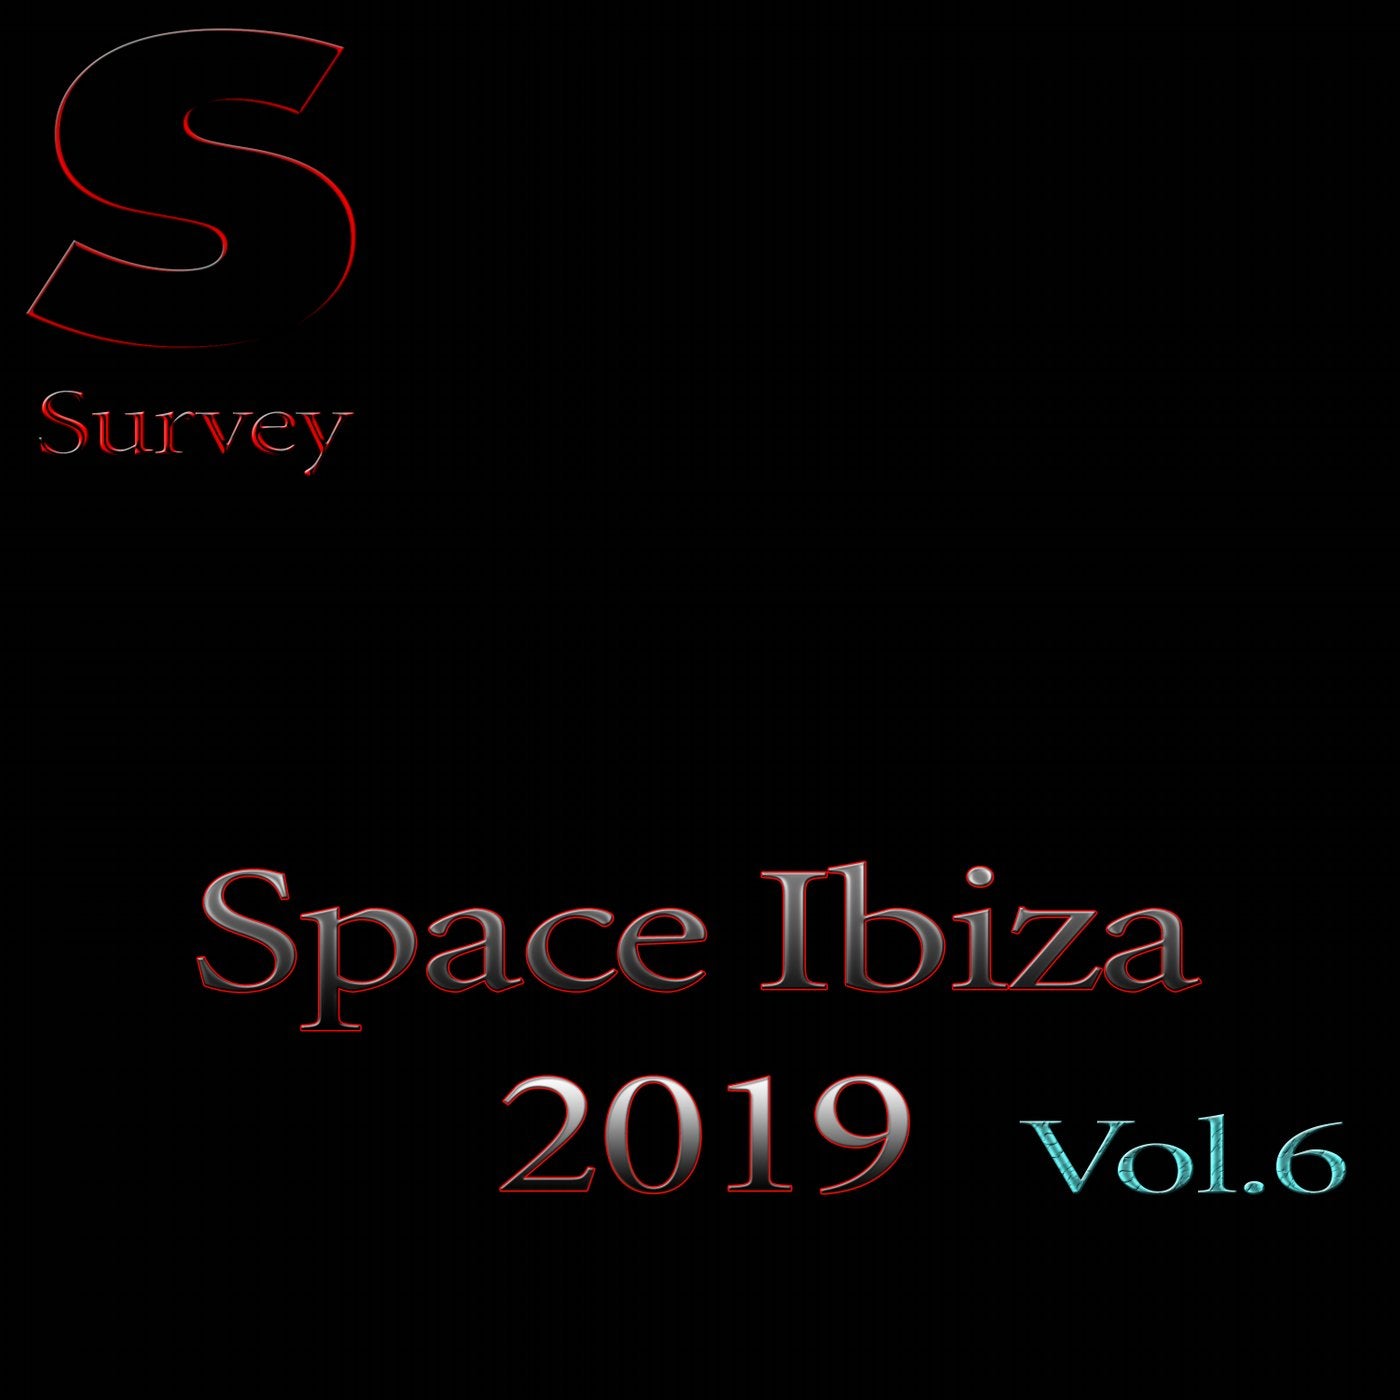 Space Ibiza 2019, Vol.6